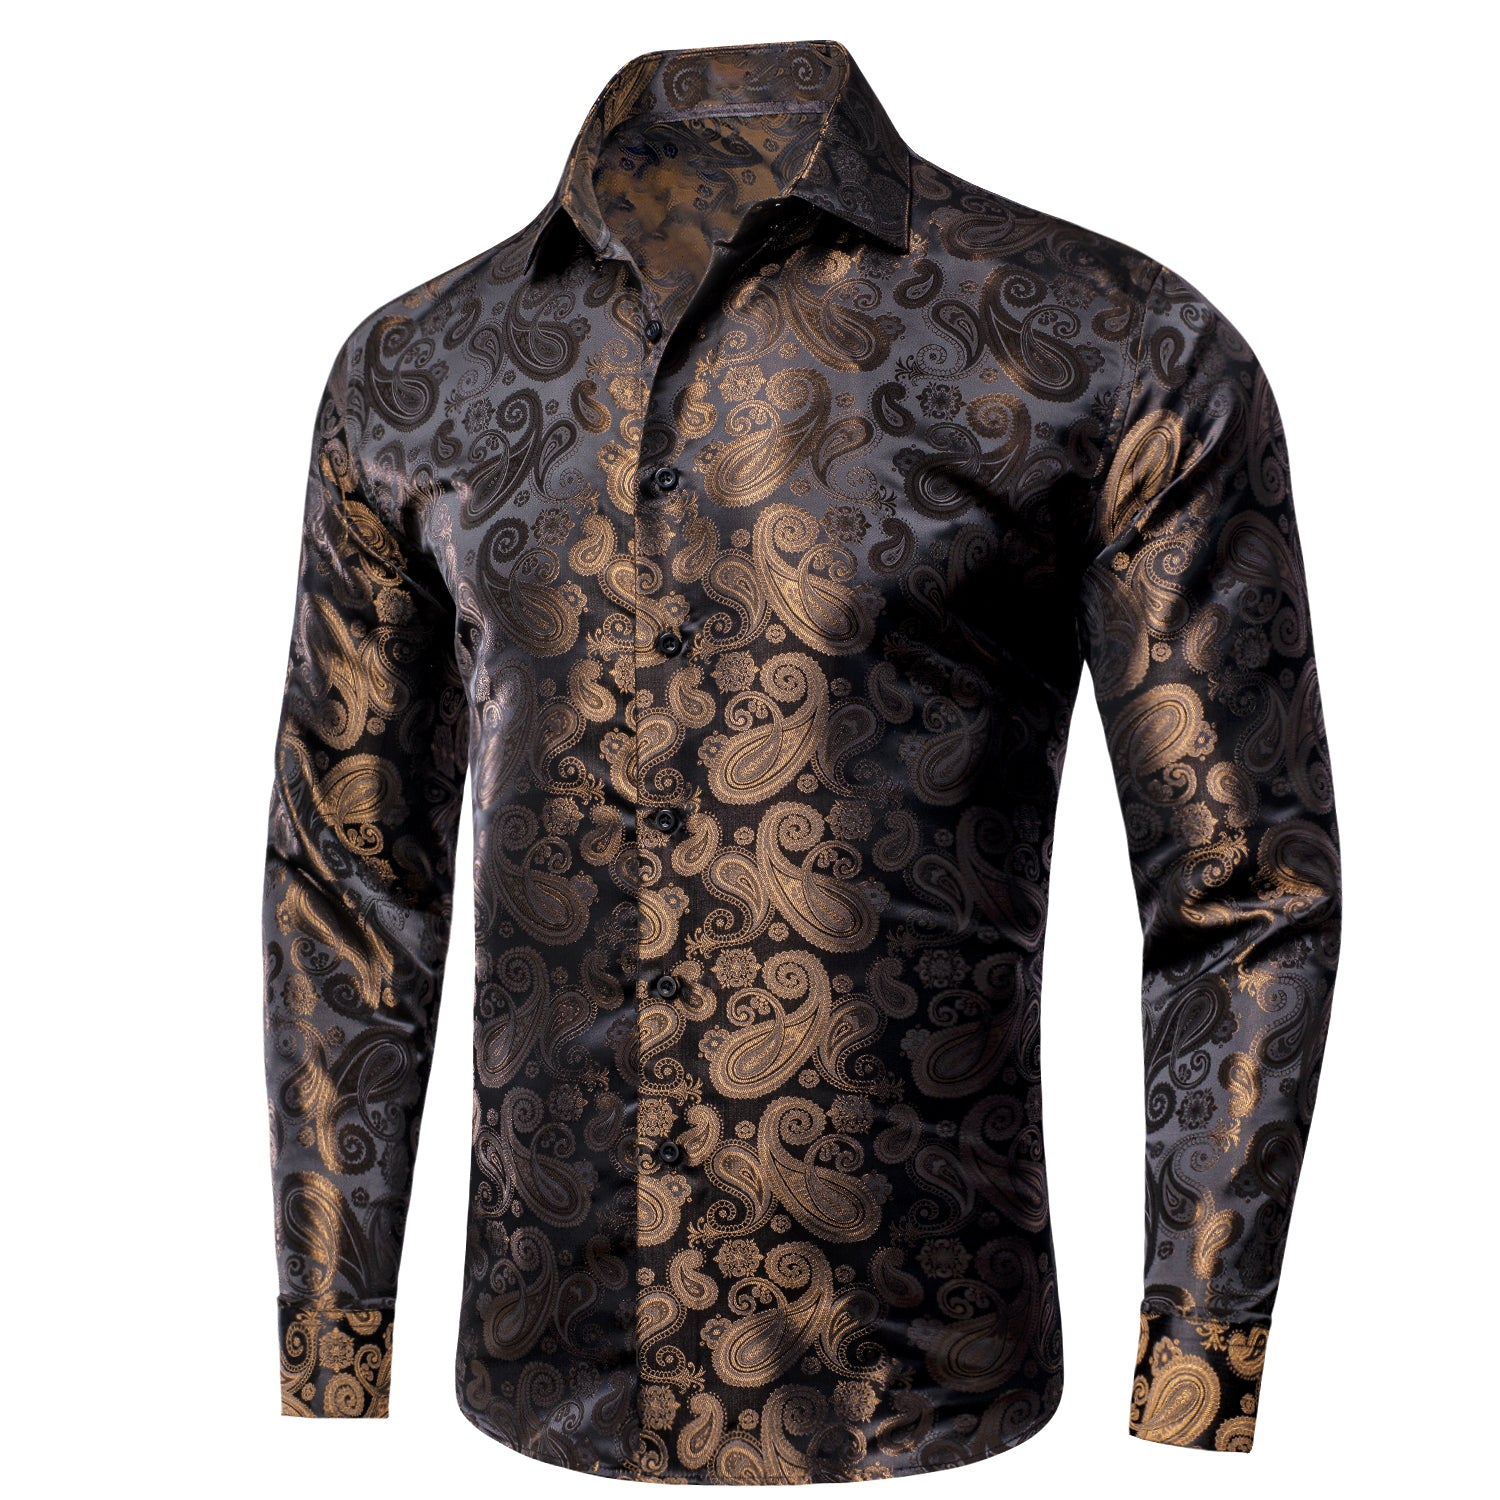 New Brown Black Paisley Silk Men's Long Sleeve Shirt Casual